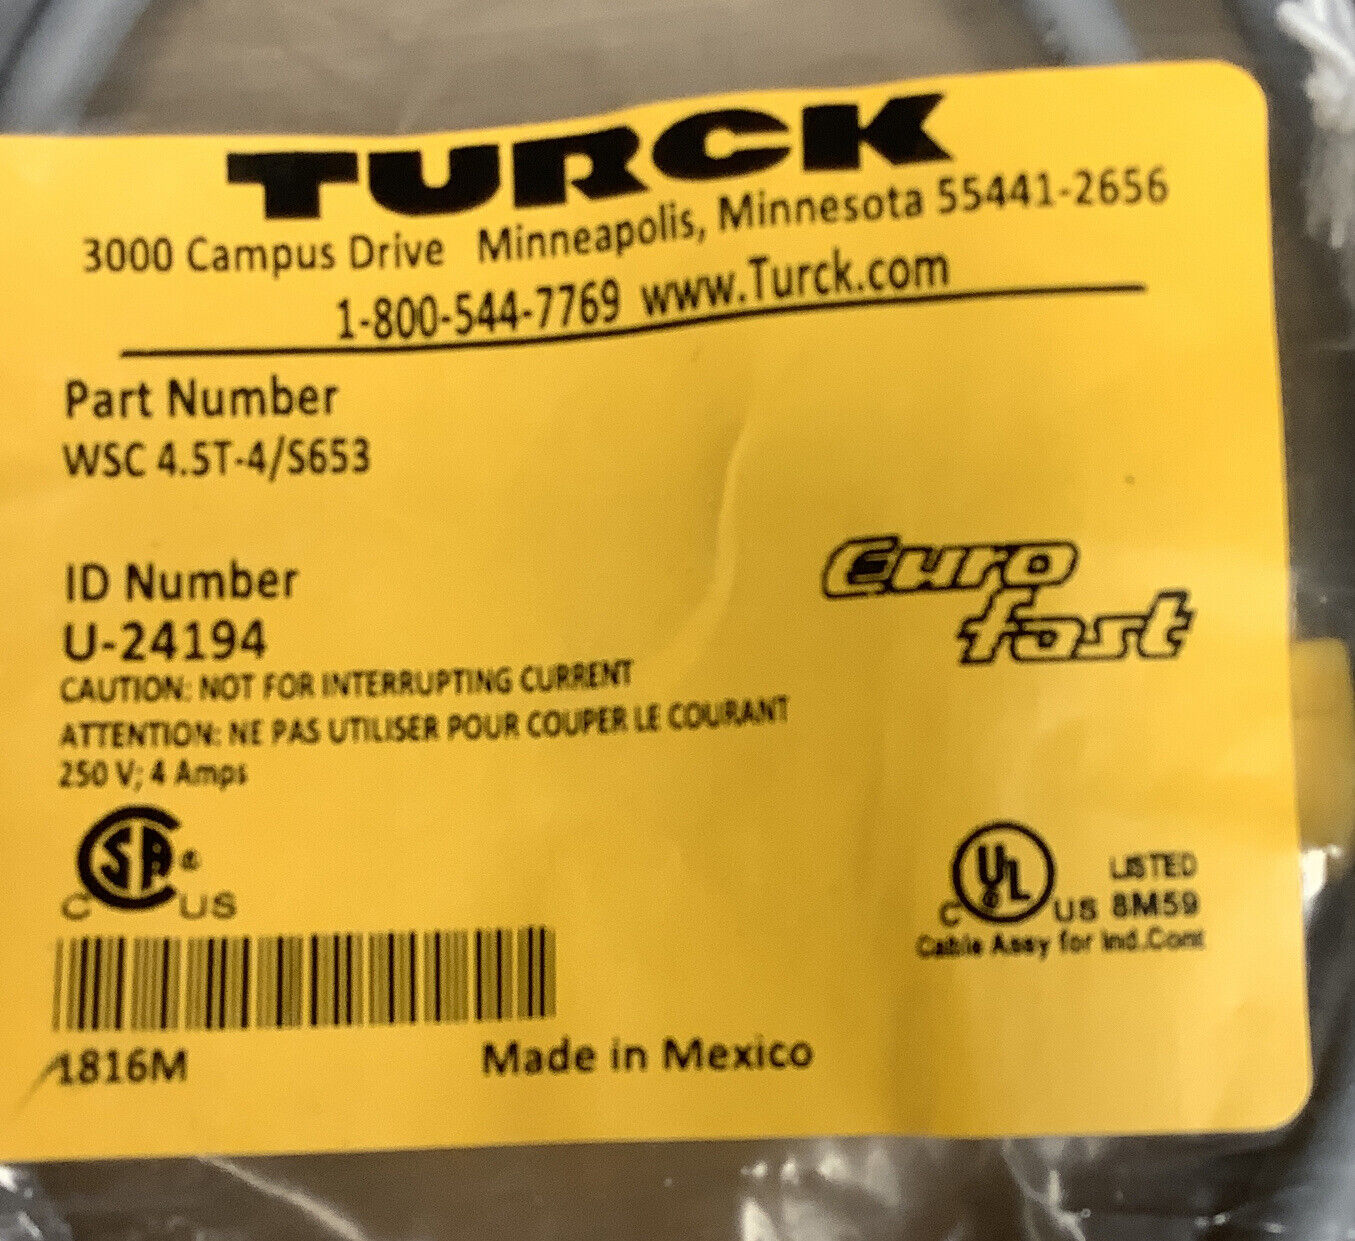 Turck WSC 4.5T-4/S653 ERUO FAST Cable/Cordset U-24194 (GR127) - 0